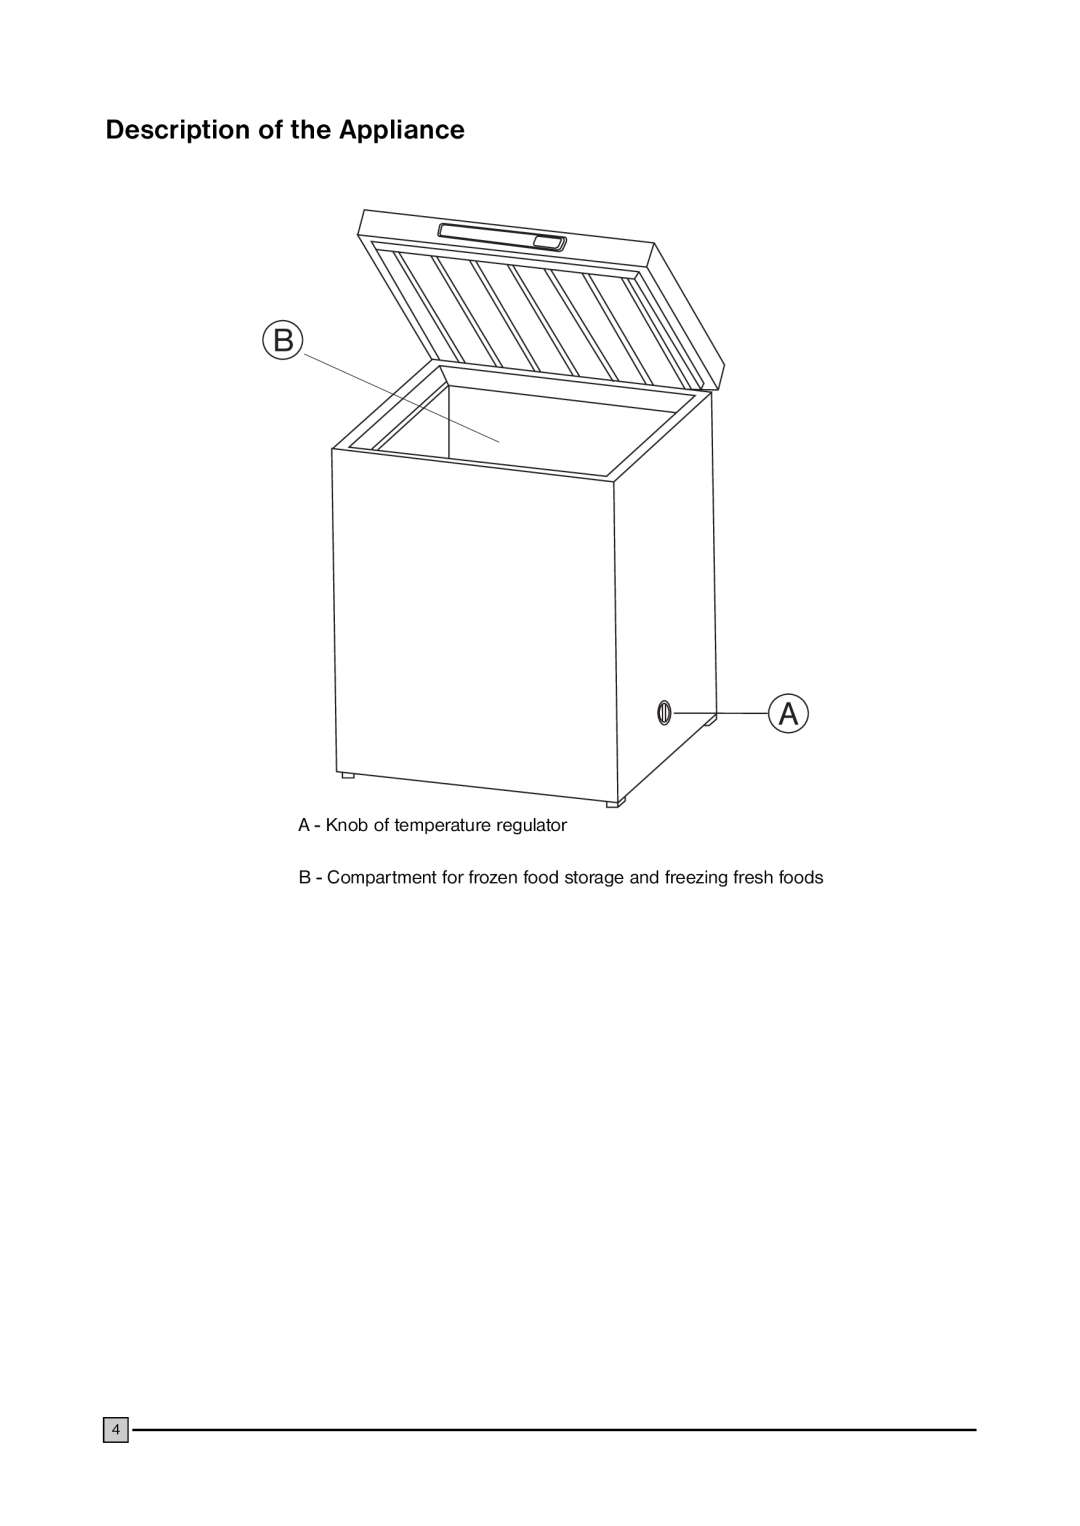 John Lewis CFI 105 installation manual Description of the Appliance, A - Knob of temperature regulator 